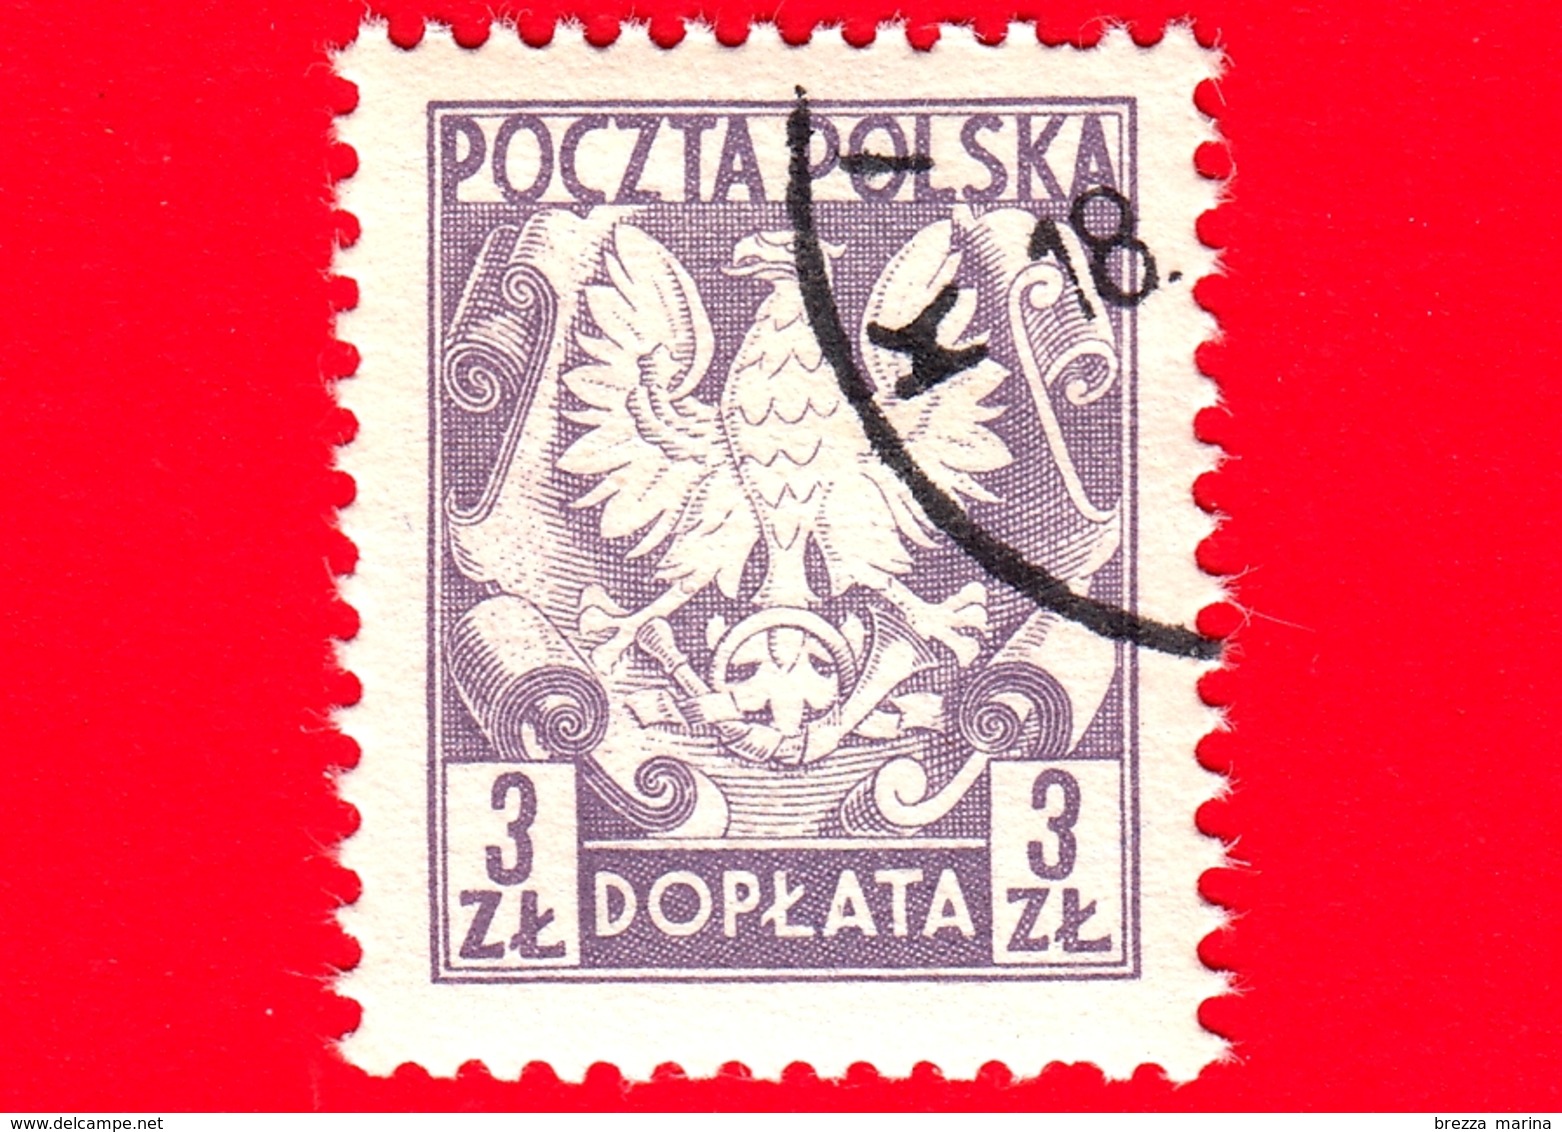 POLONIA - POLSKA - Usato - 1980 - Segnatasse - Taxe - Aquila - Coat Of Arms Of Poland - 3 - Taxe